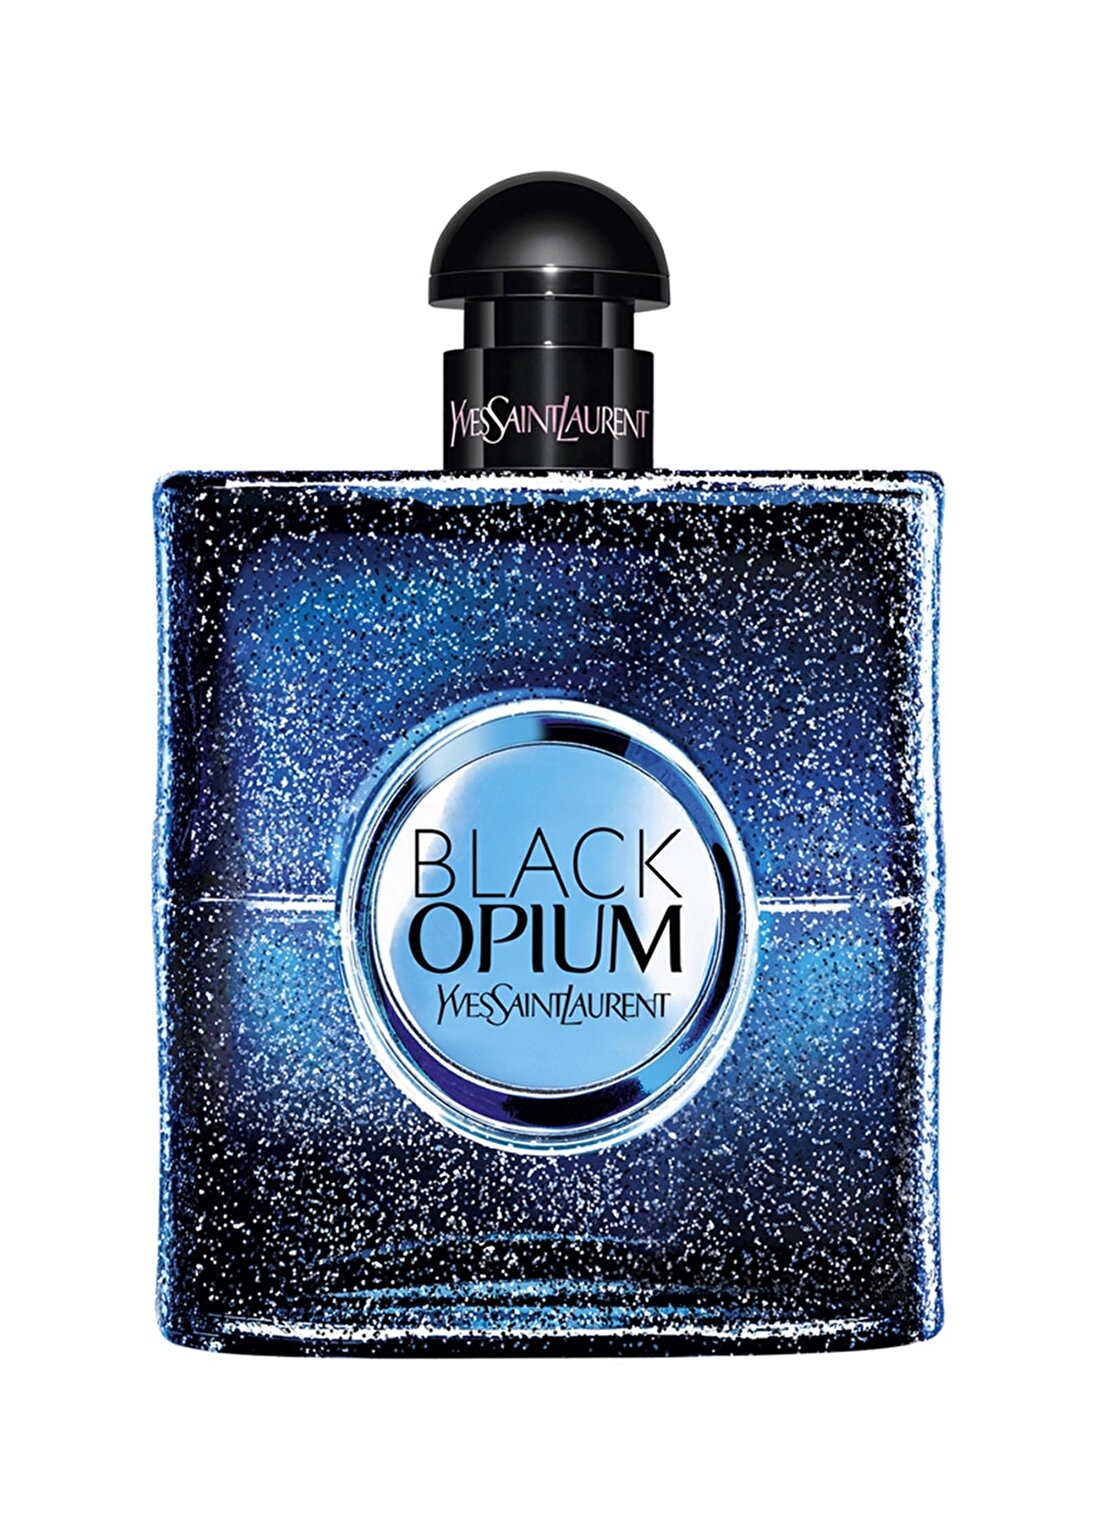 Yves Saint Laurent Black Opium Edp Intense 90 Ml Kadın Parfüm